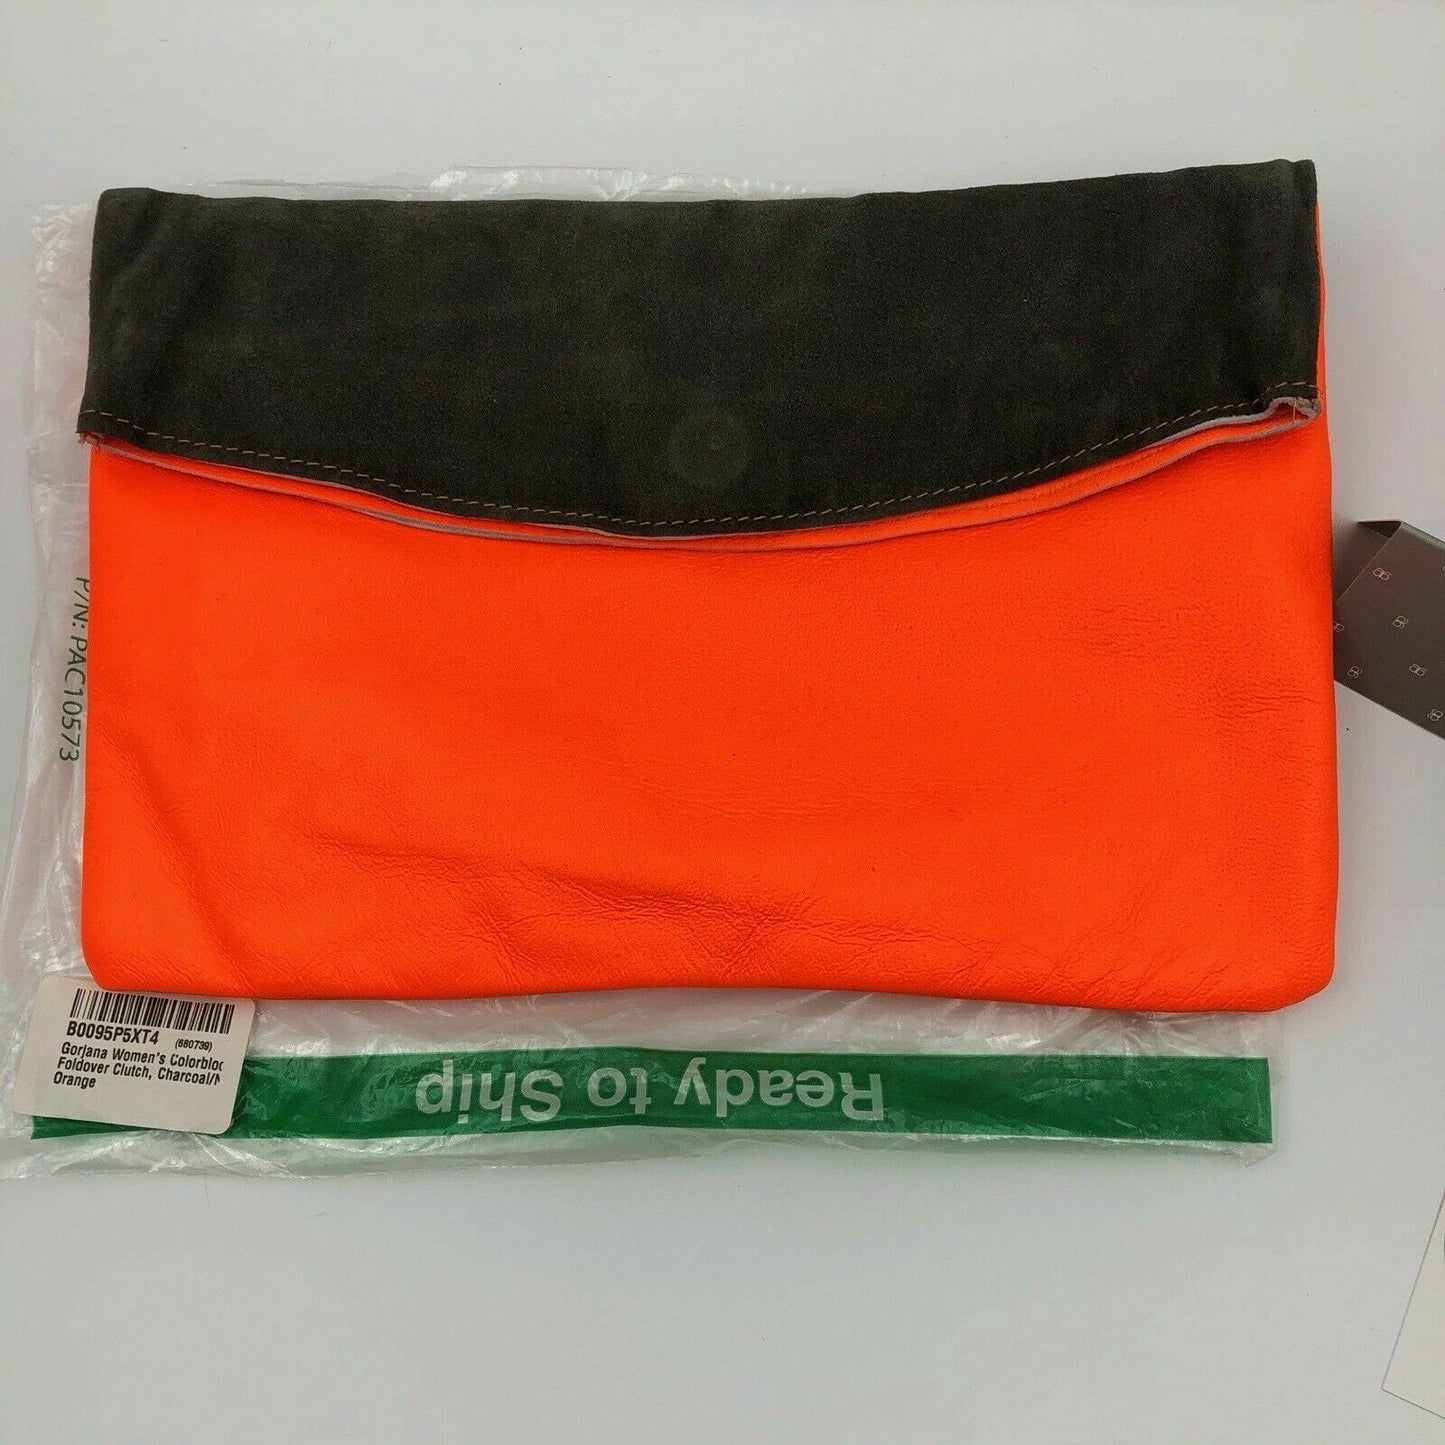 Gorjana Women’s Colorblock Foldover Clutch Purse Charcoal Orange Magnet Closure